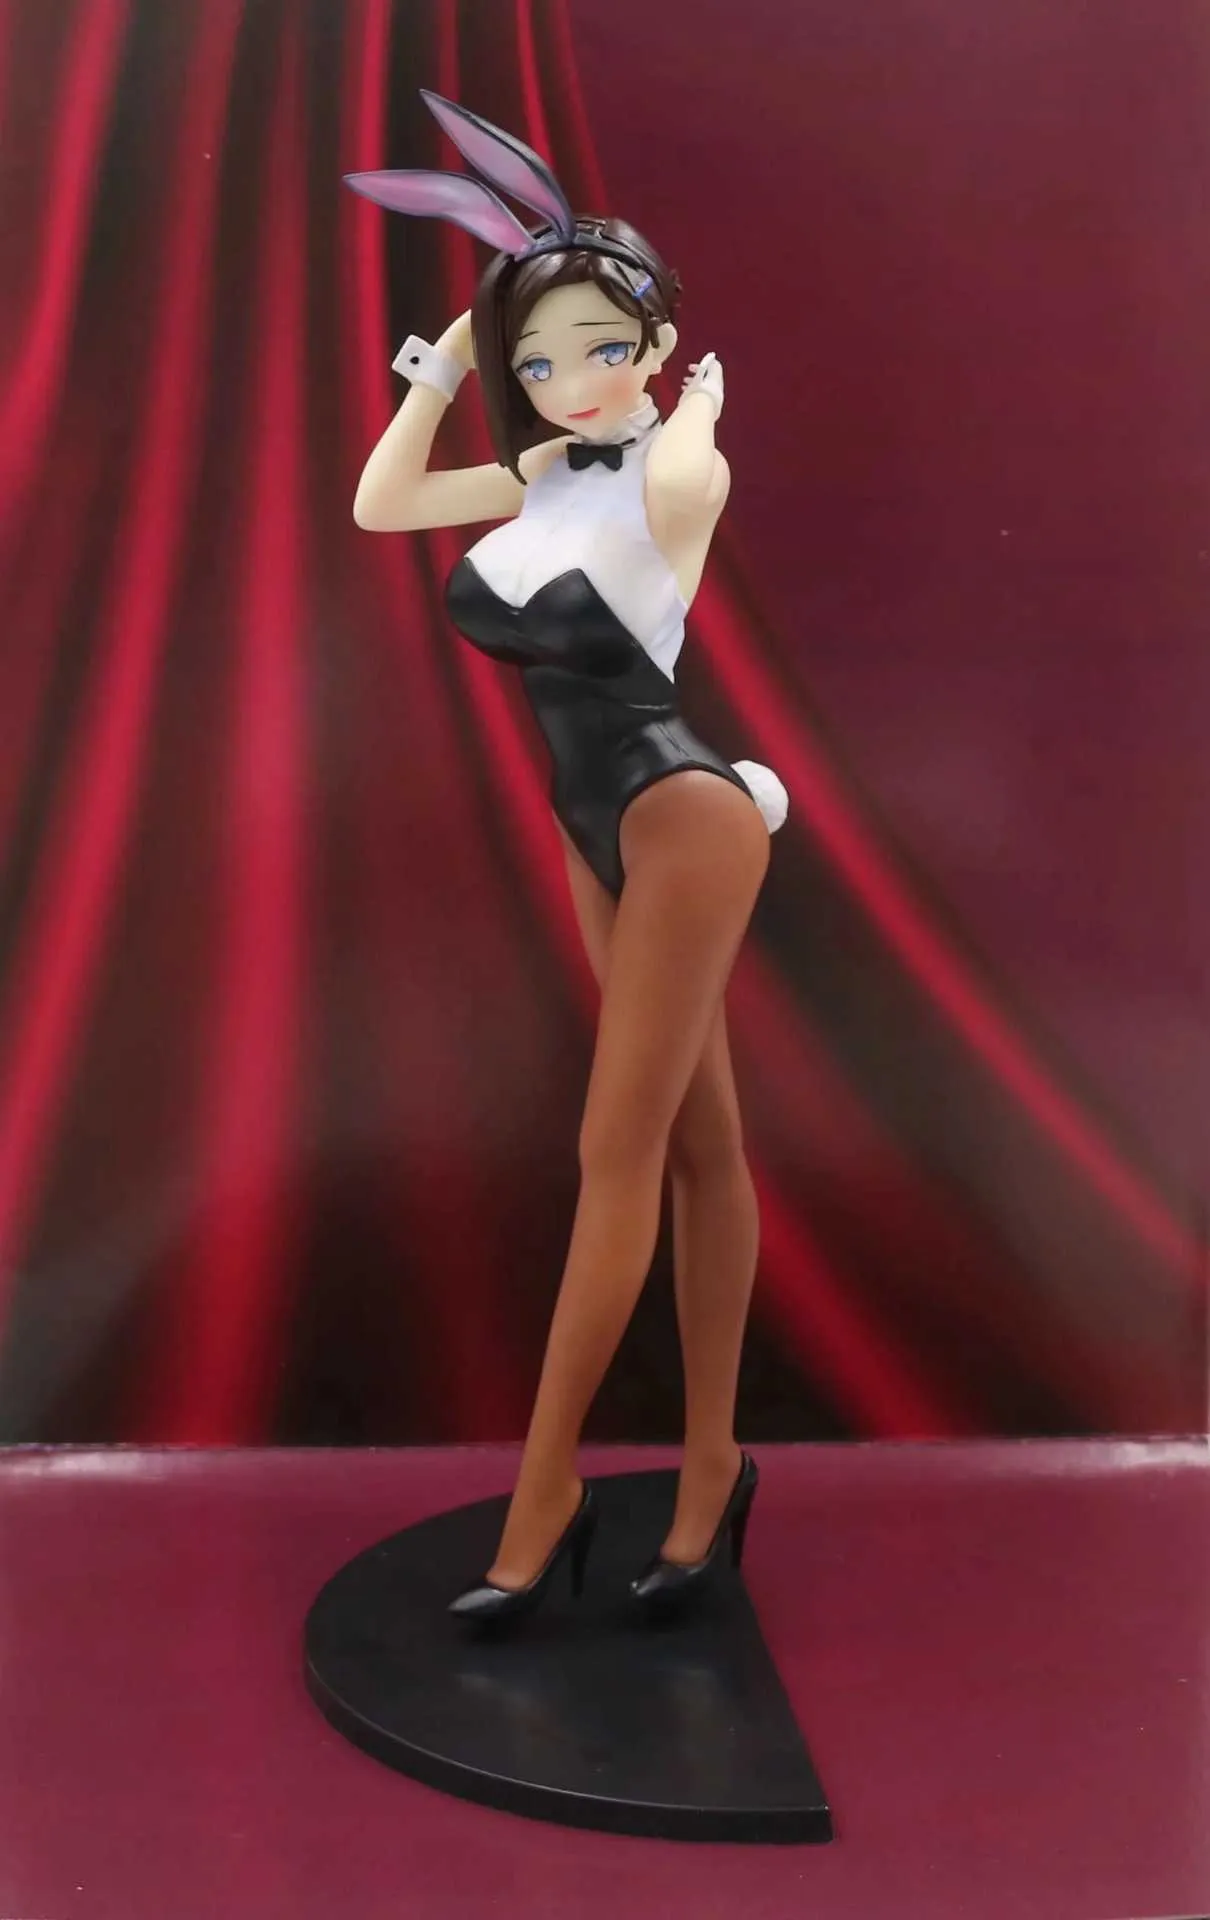 Tawawa on monday Kouhaichan anime figures Aichan Bunny girl 26cm PVC action figure toy Model Toys Sexy Girl Collection Doll Q0727248833